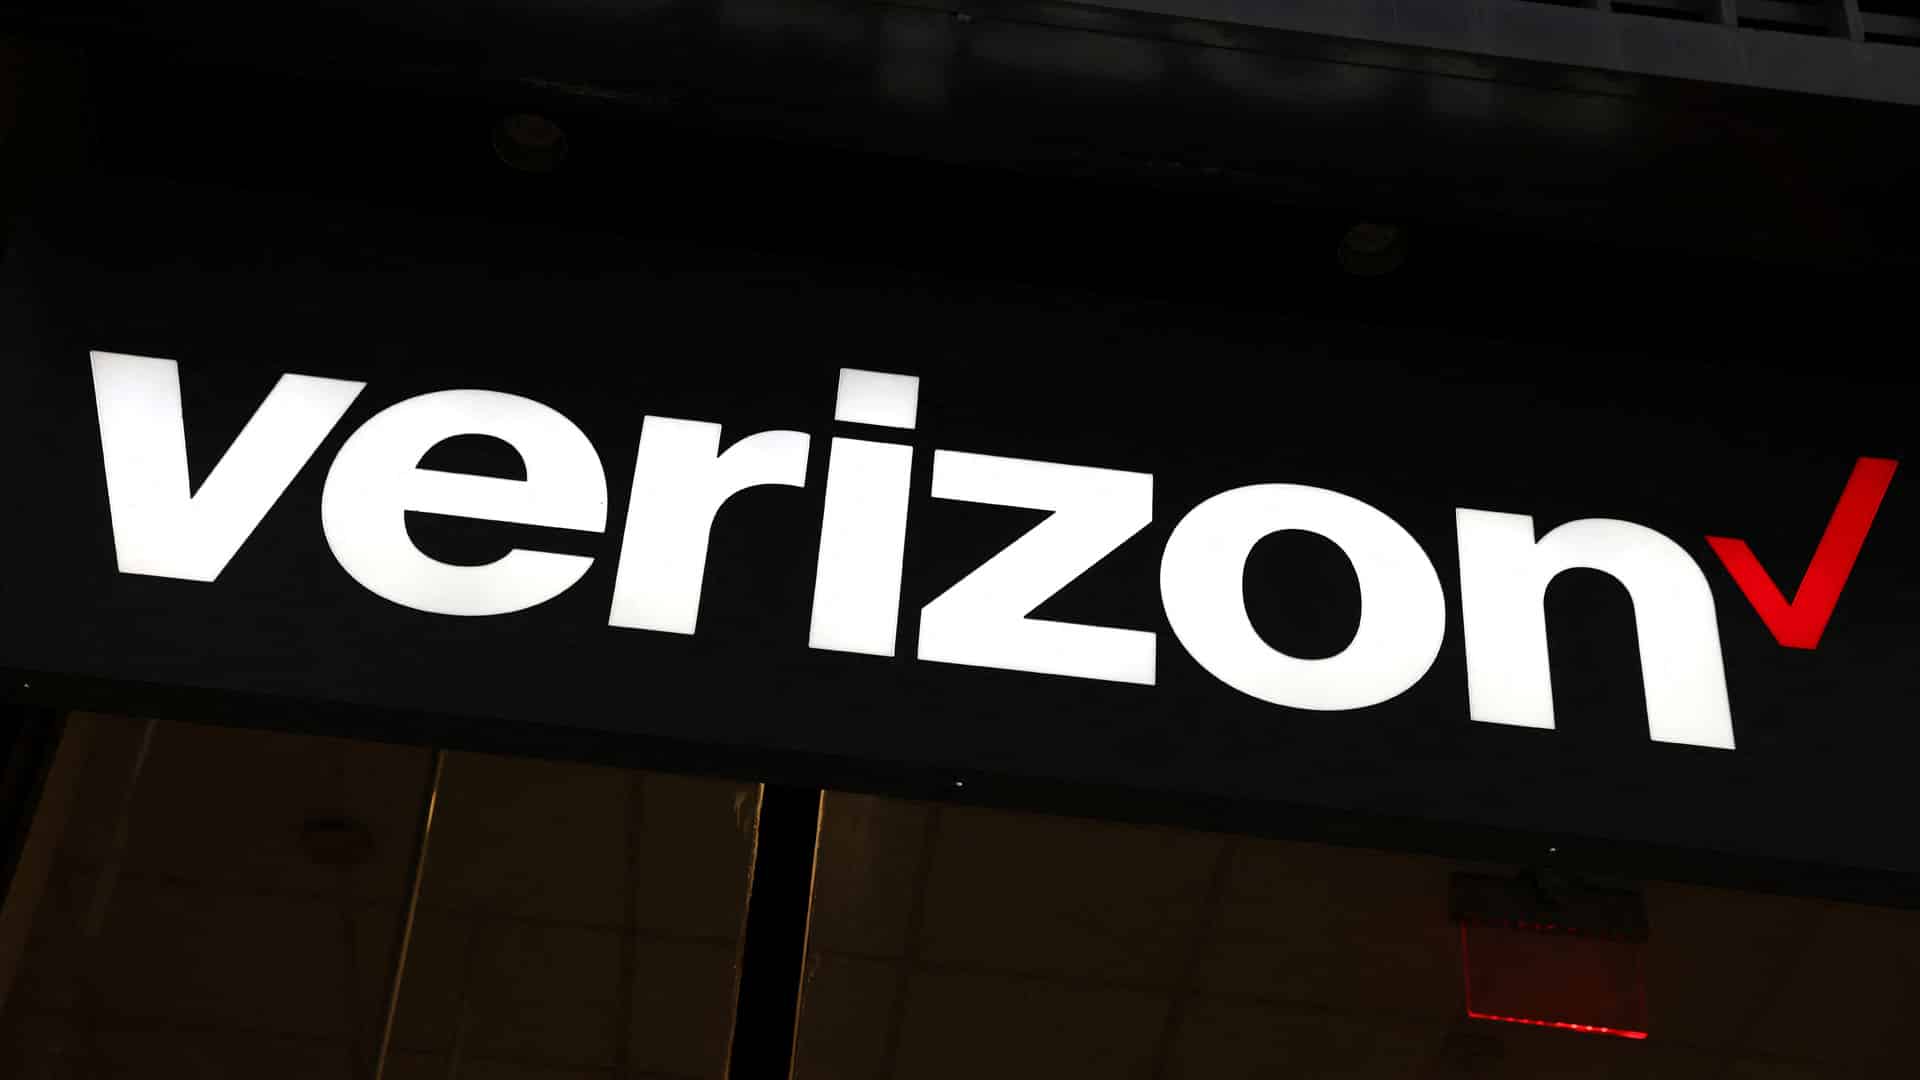 Verizon Business inks USD 2.1 bn technology deal with HCLTech